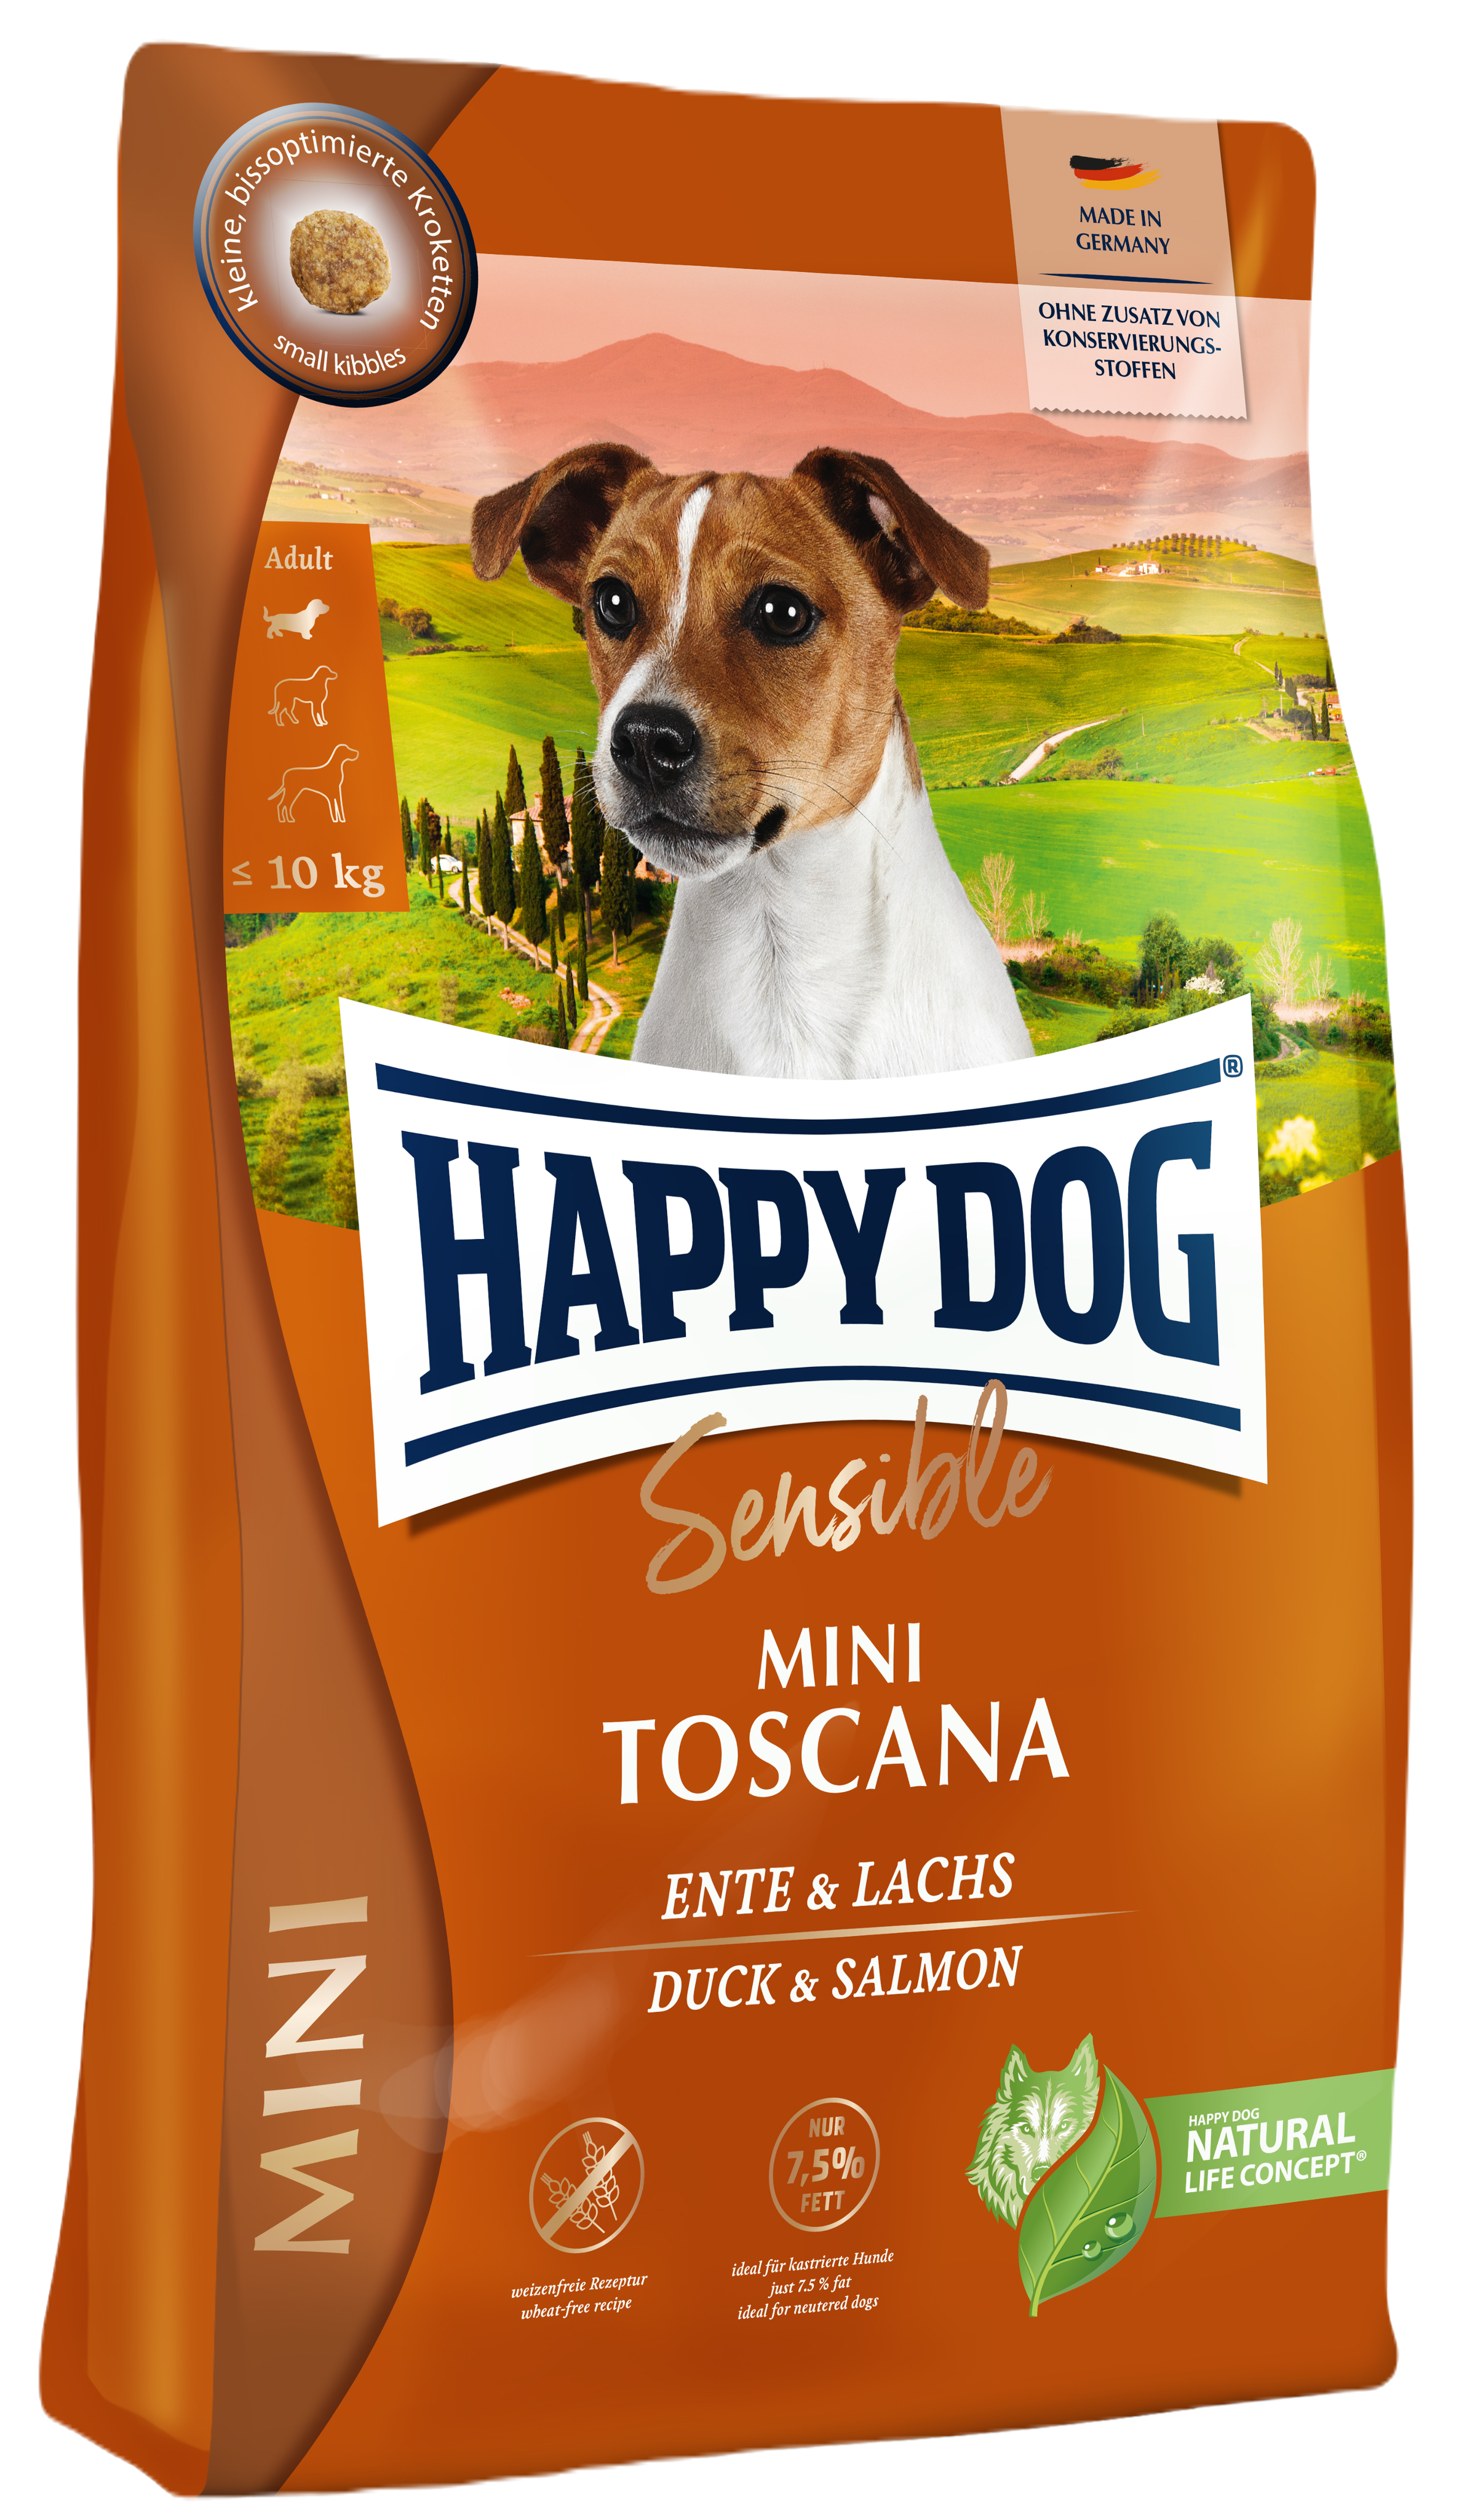 Sensible Mini Toscana Duck & Salmon 800 g - Hund - Hundmat & hundfoder - Torrfoder för hund - Happy Dog - ZOO.se